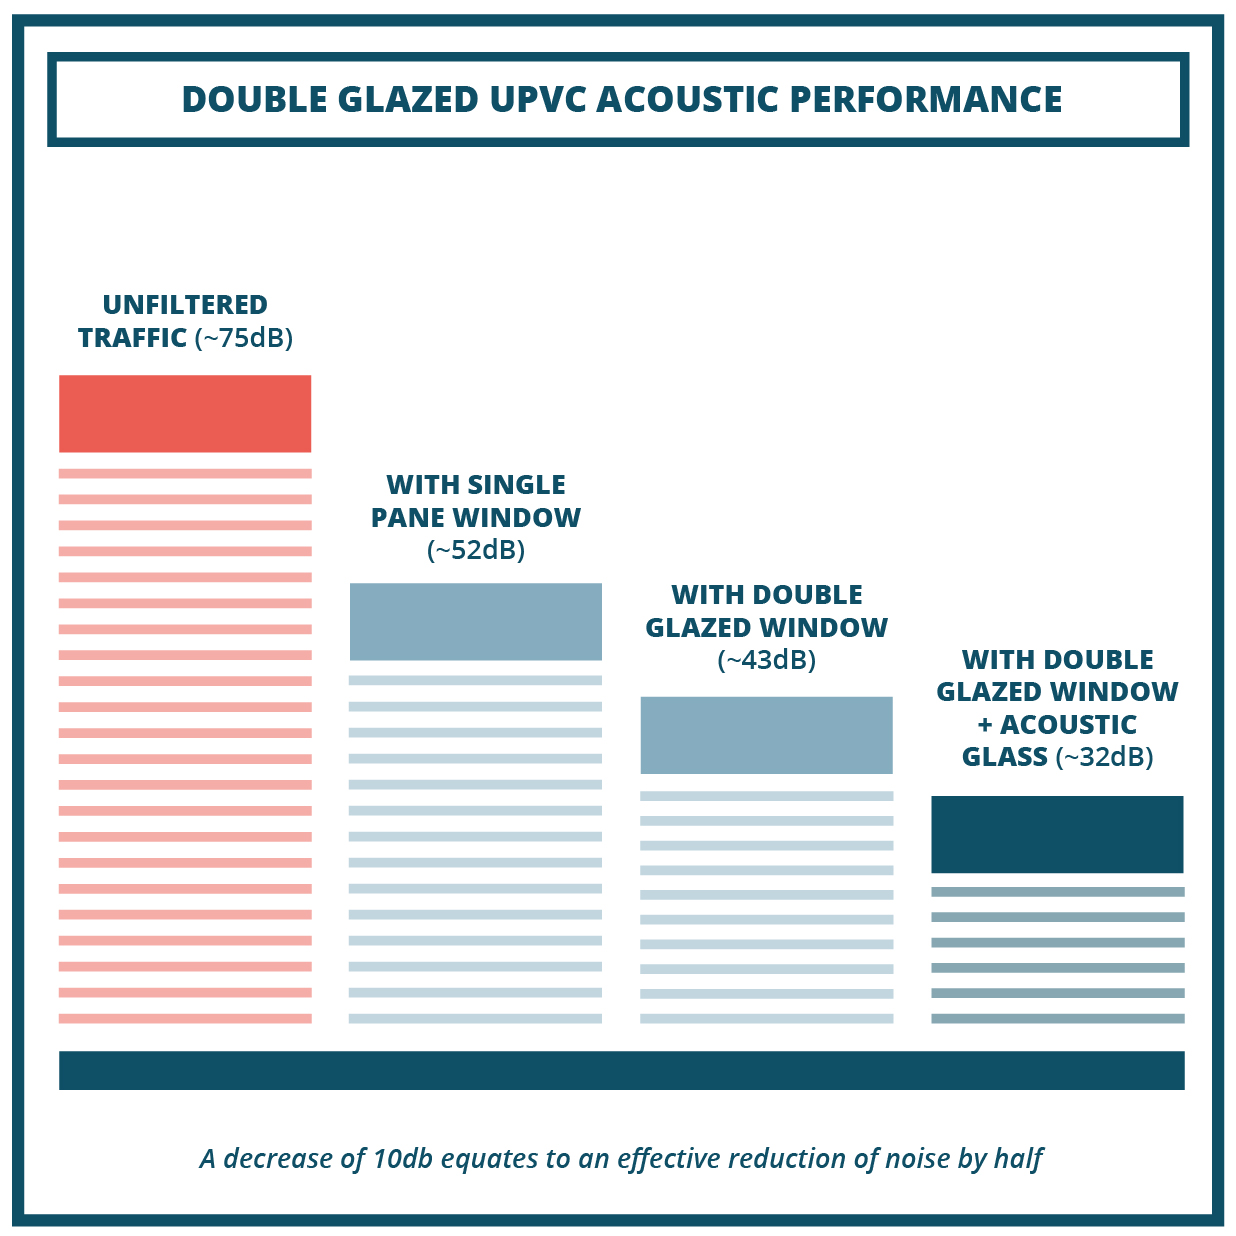 Acoustic performance of double glazing versus single glazed windows